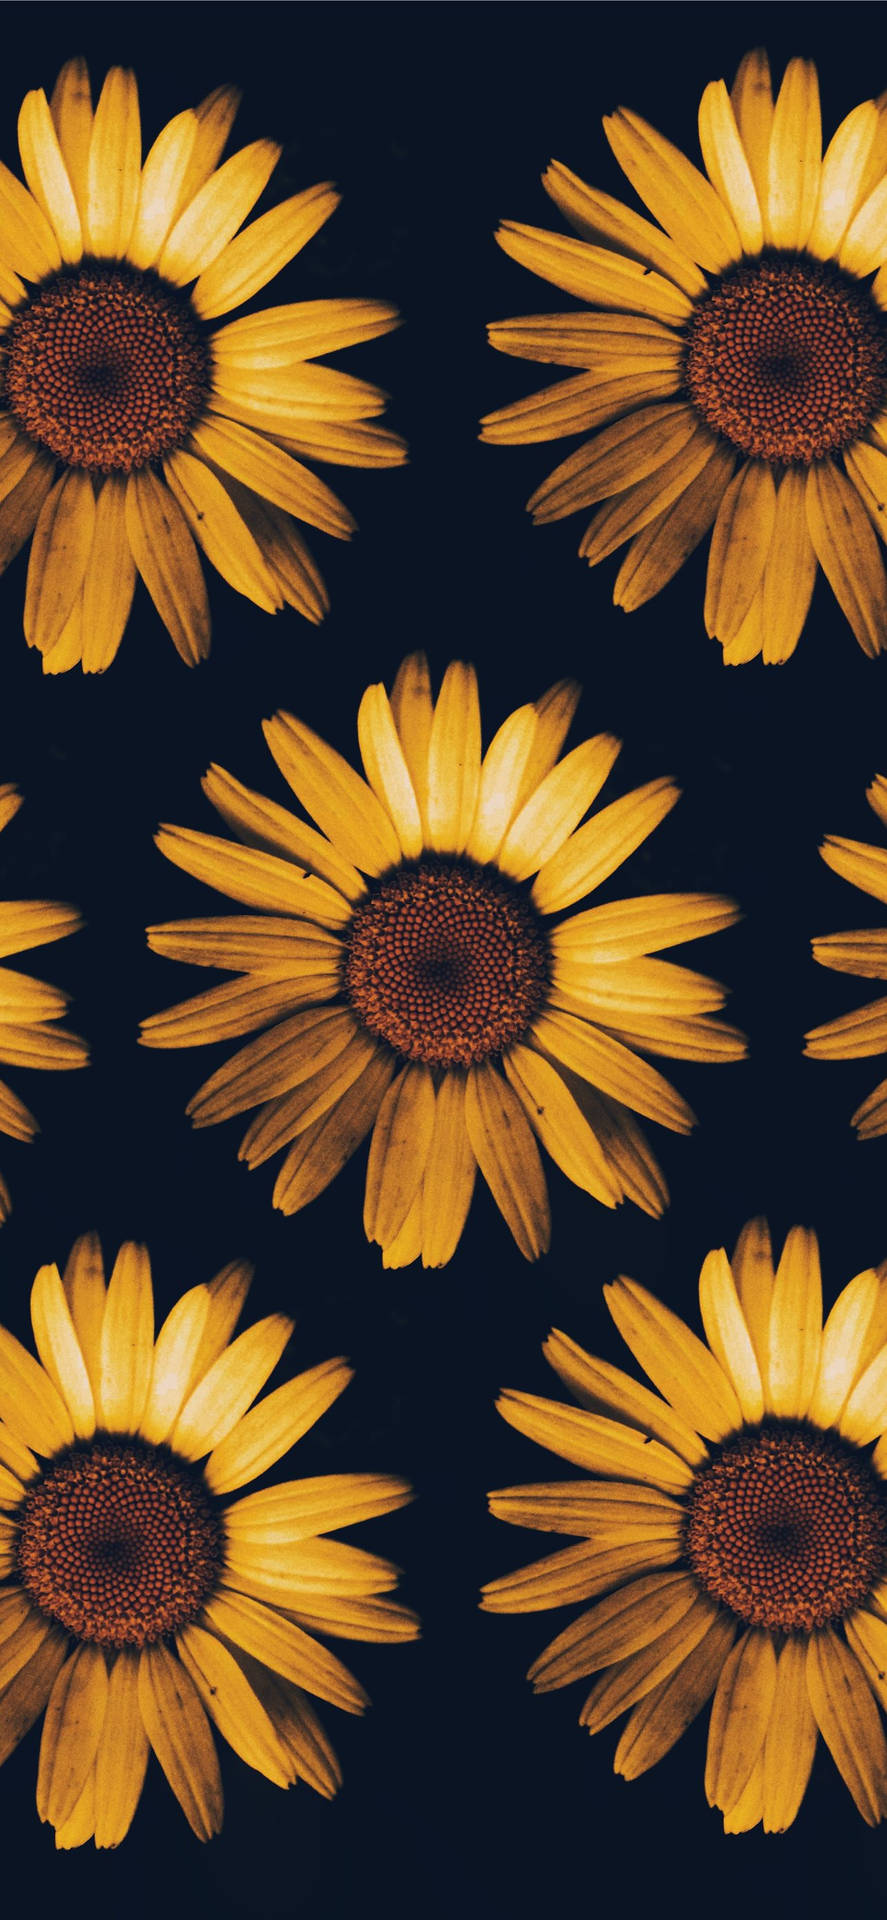 Black And Yellow Sunflower Iphone Wallpaper